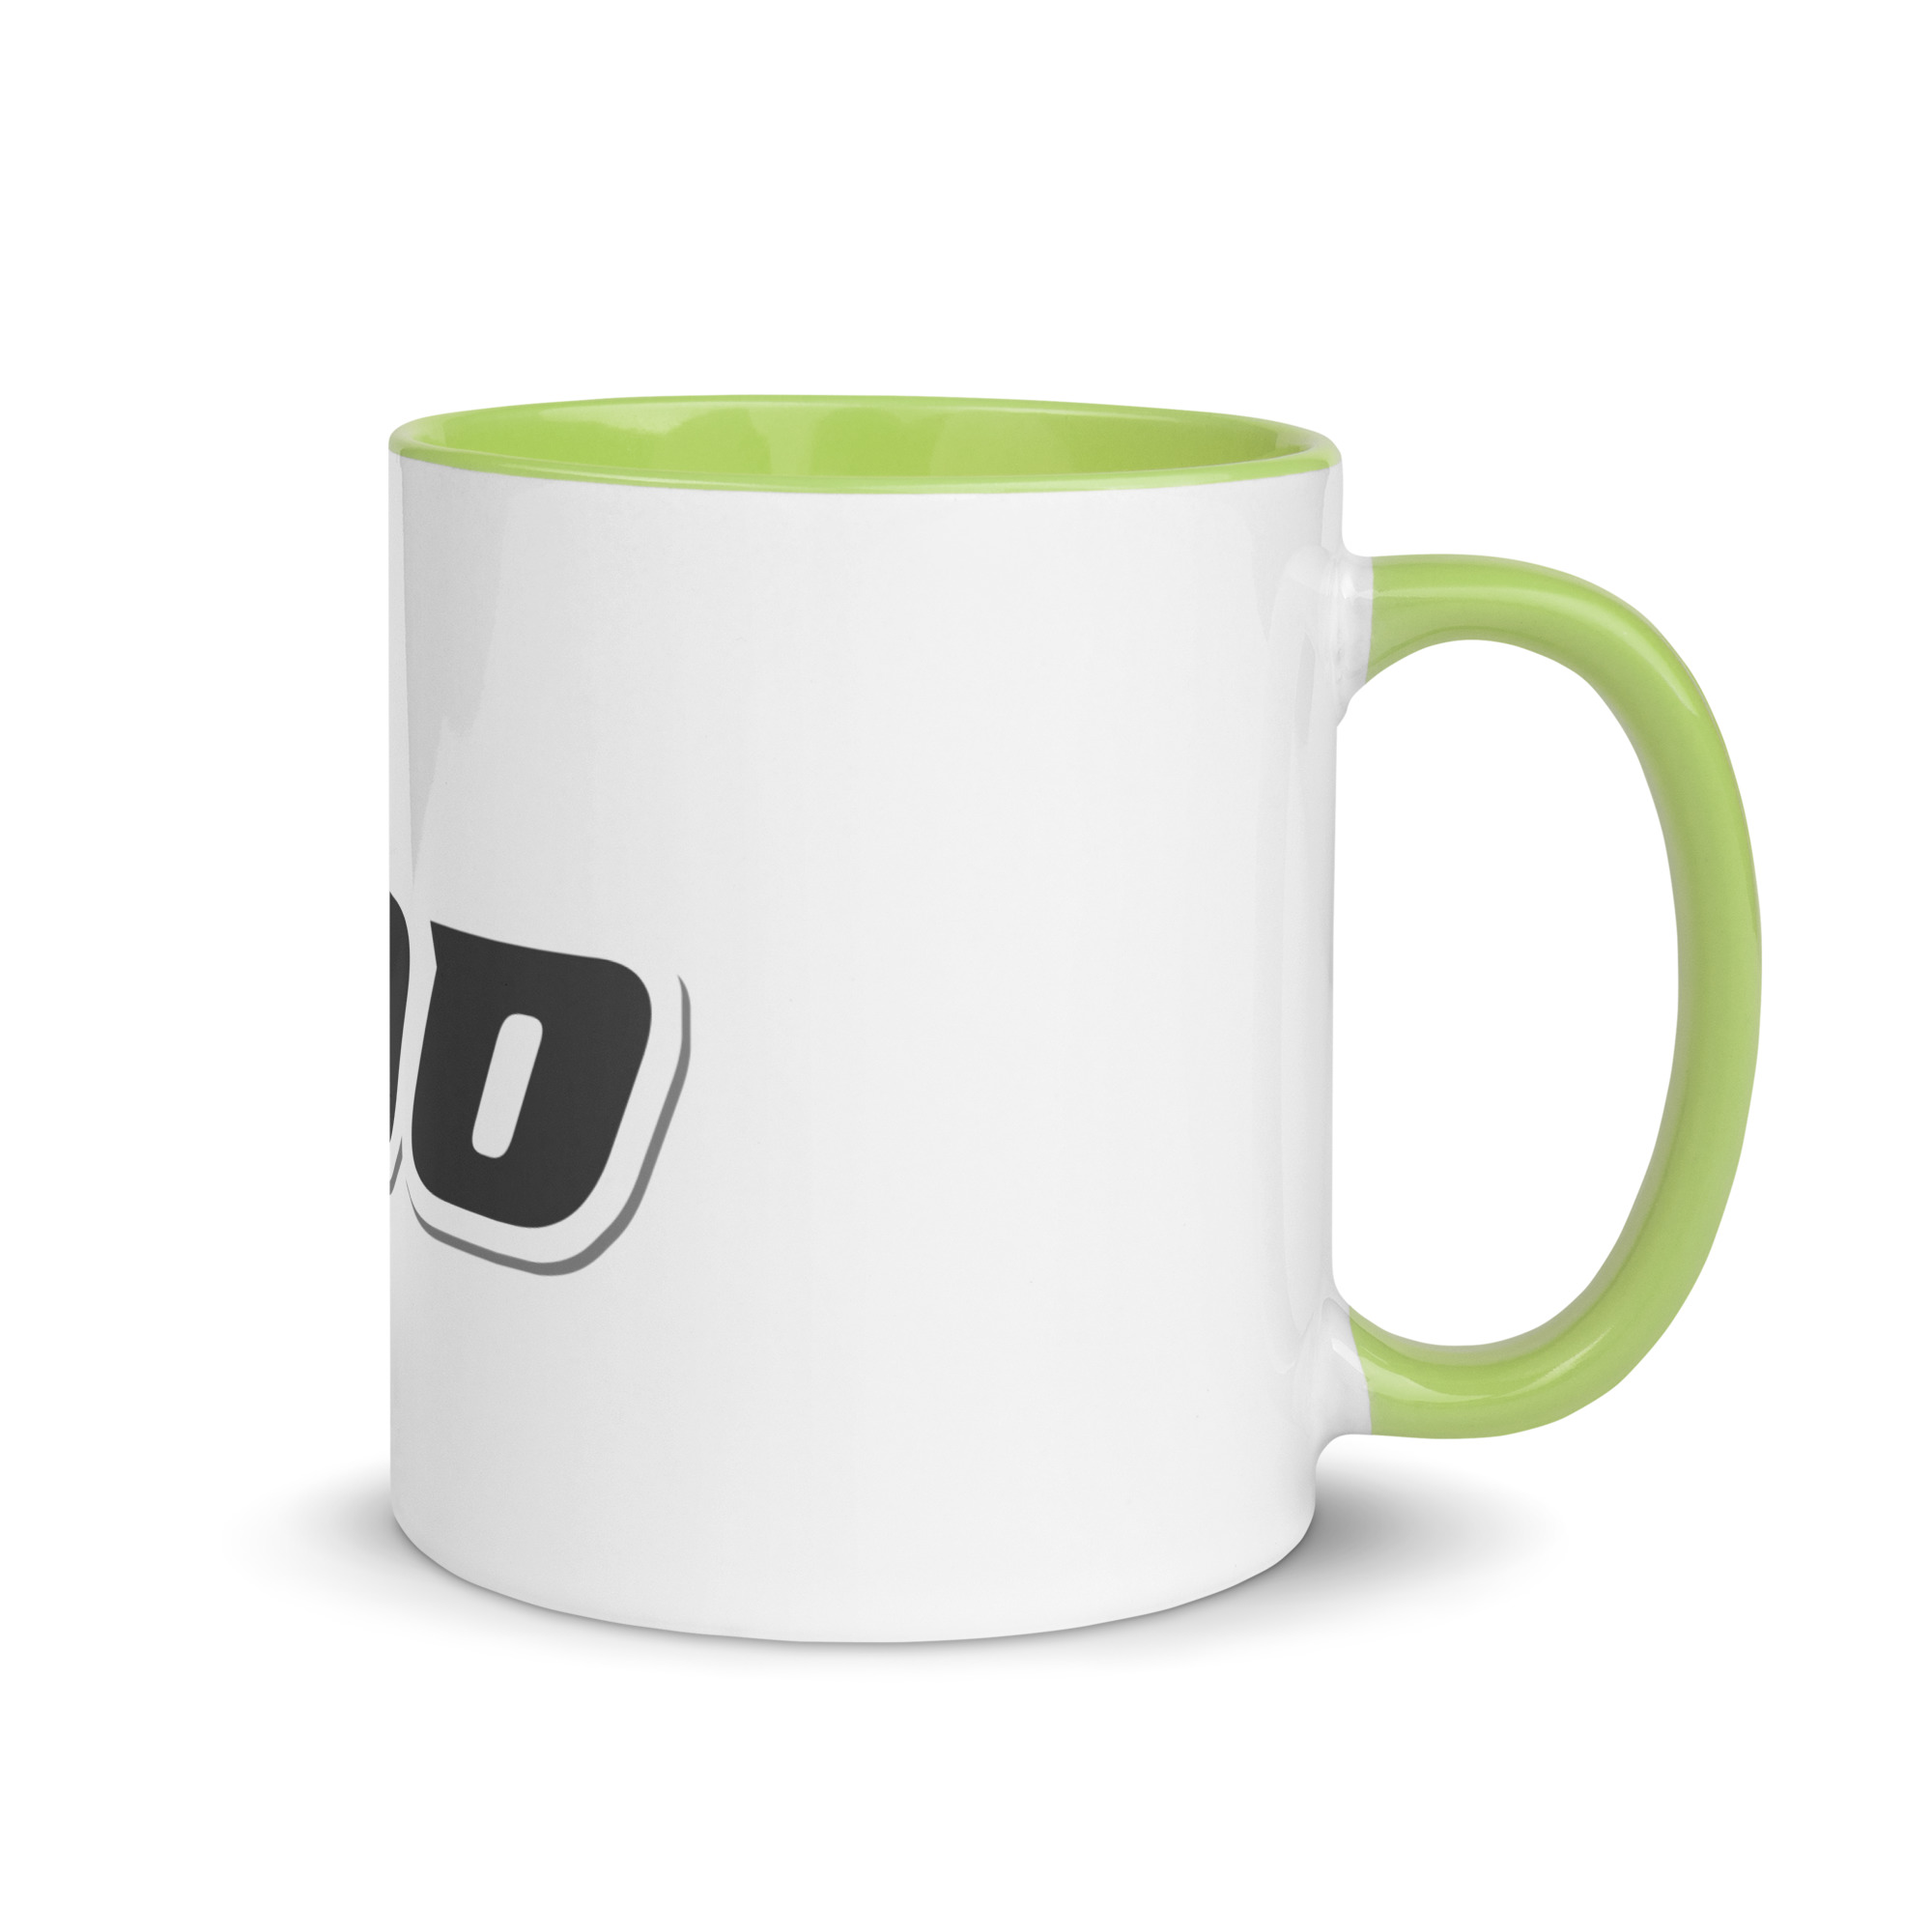 white-ceramic-mug-with-color-inside-green-11-oz-right-6525b6484cb56.jpg